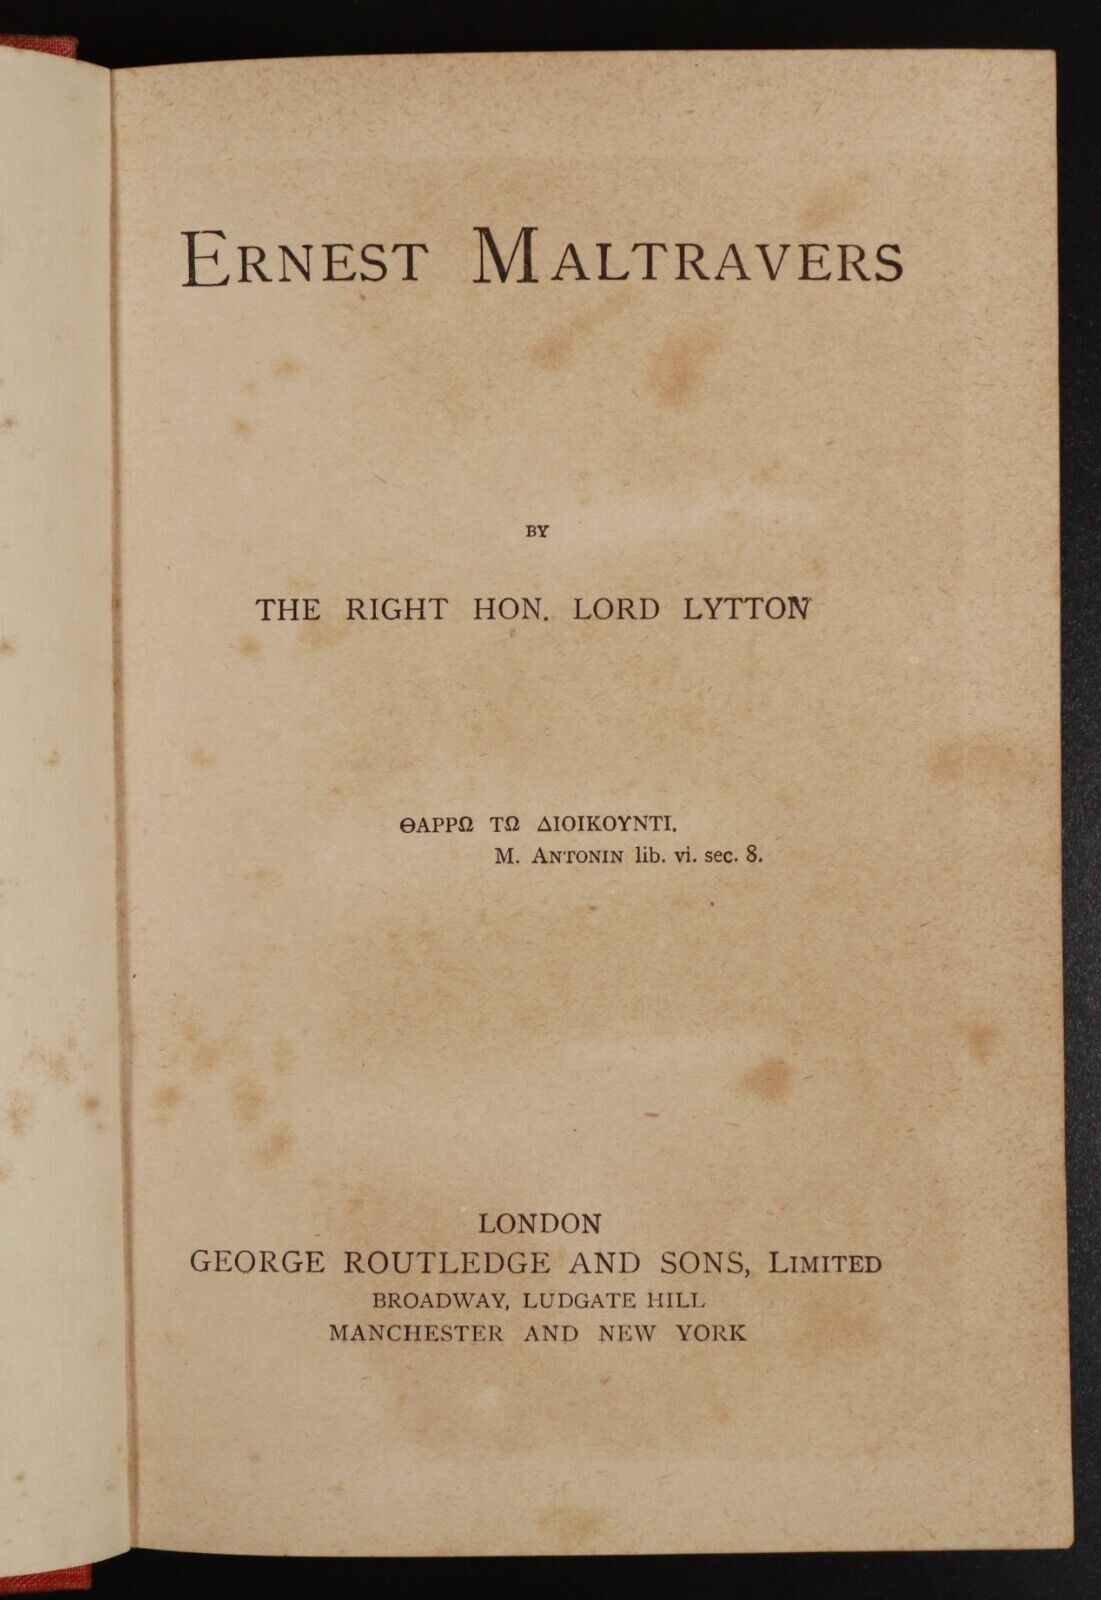 c1895 Ernest Maltravers by Lord Lytton Antiquarian British Fiction Book - 0